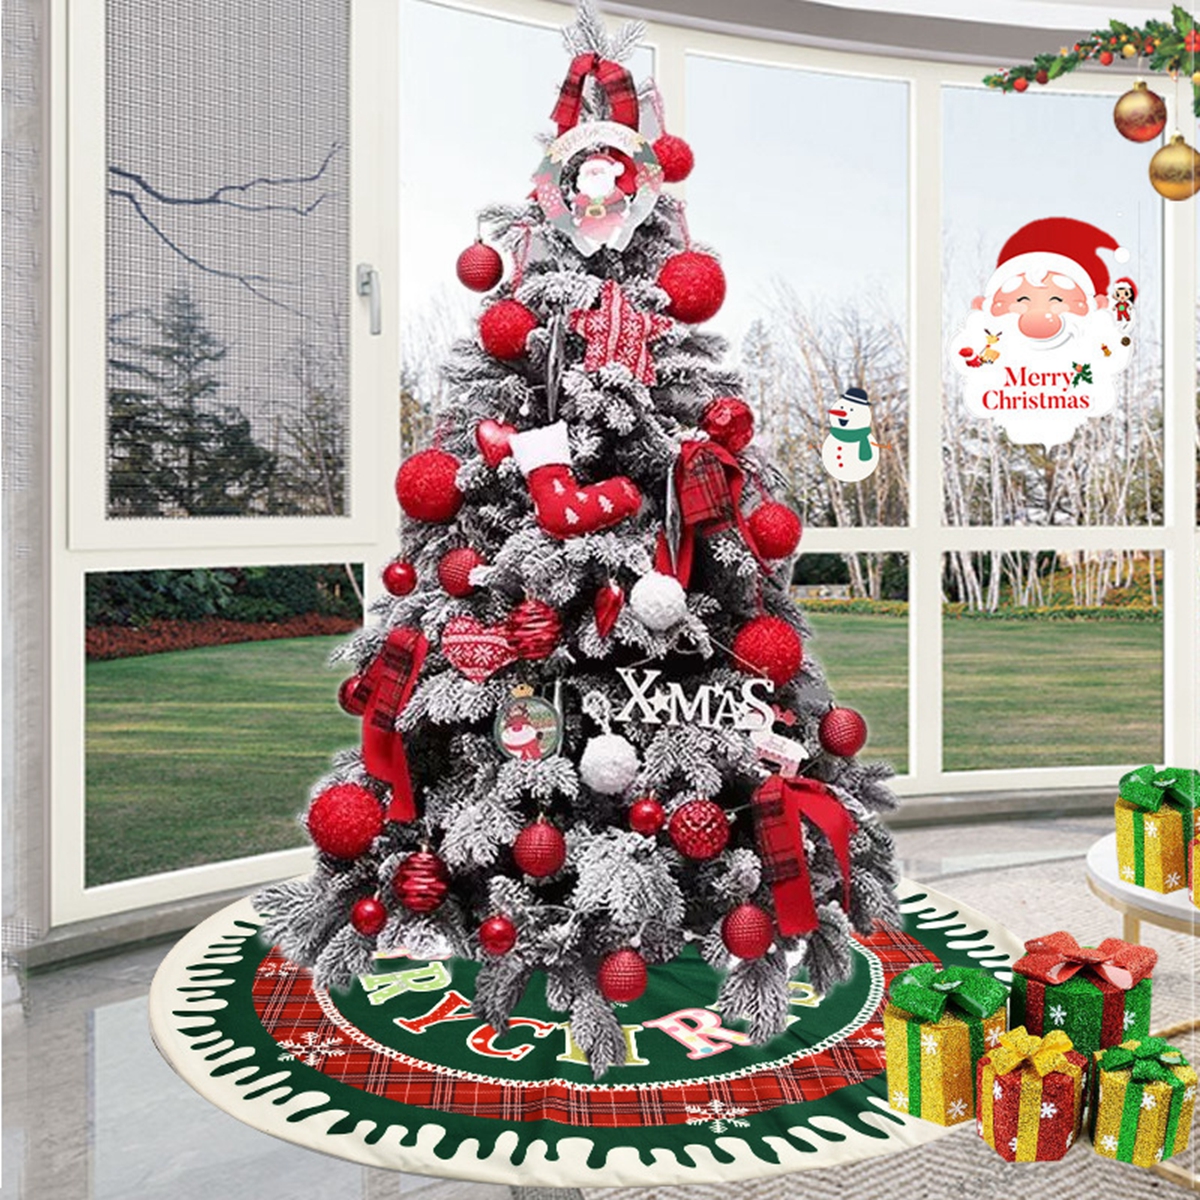 J9YXDU Xmas พรมนาตาลบ้านของขวัญ Santa Claus Christmas Tree กระโปรงต้นไม้พรมเช็ดเท้าผ้าห่ม